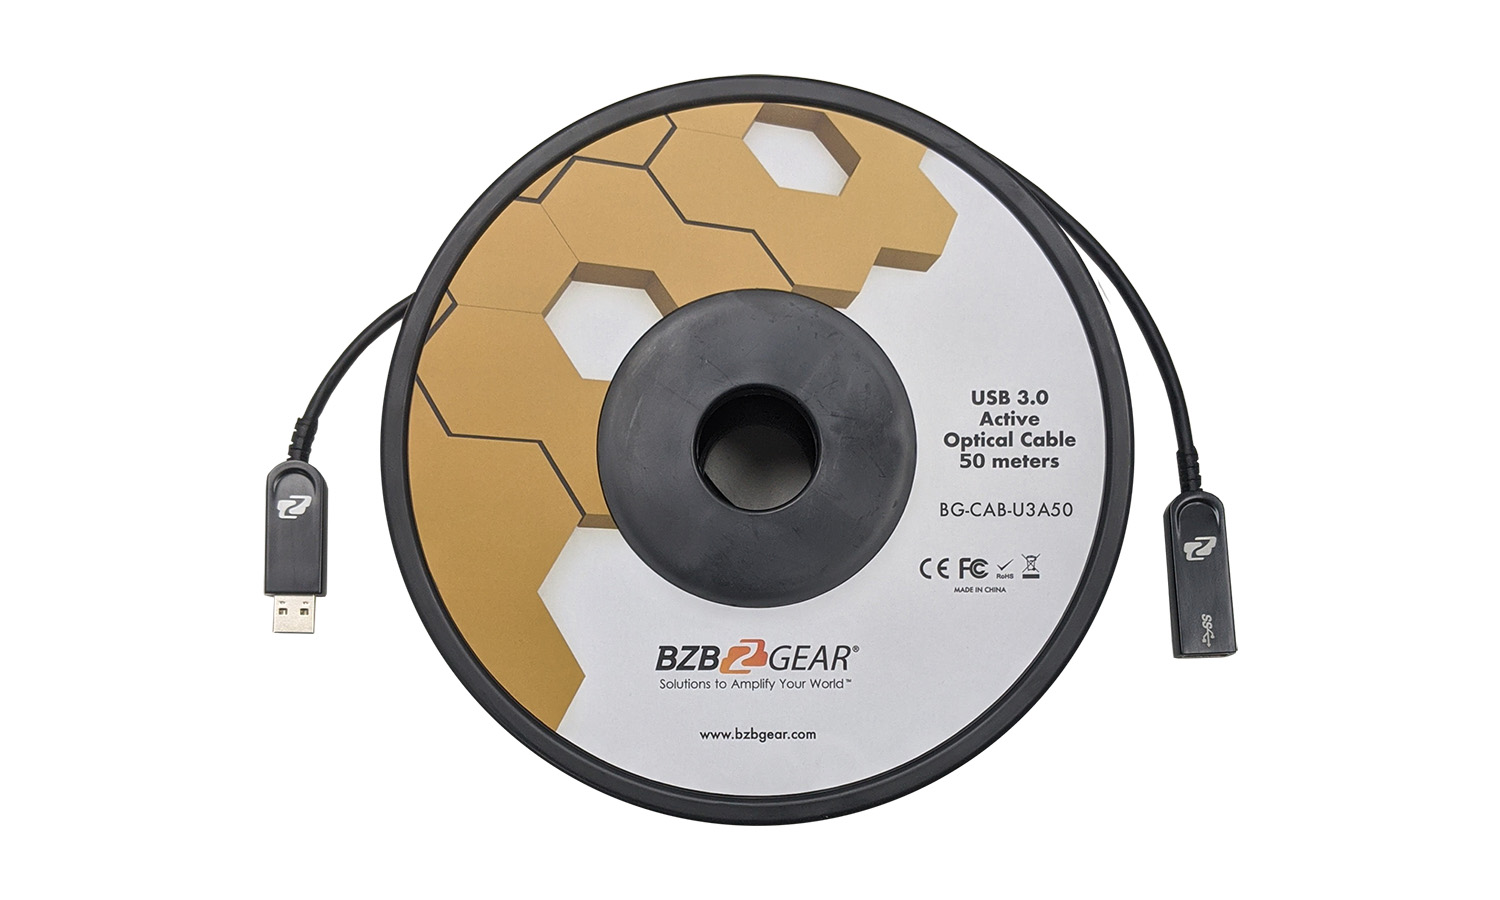 BG-CAB-U3A50 USB 3.0 AM/AF Active Optical Extension Cable - 50m/164ft by BZBGEAR